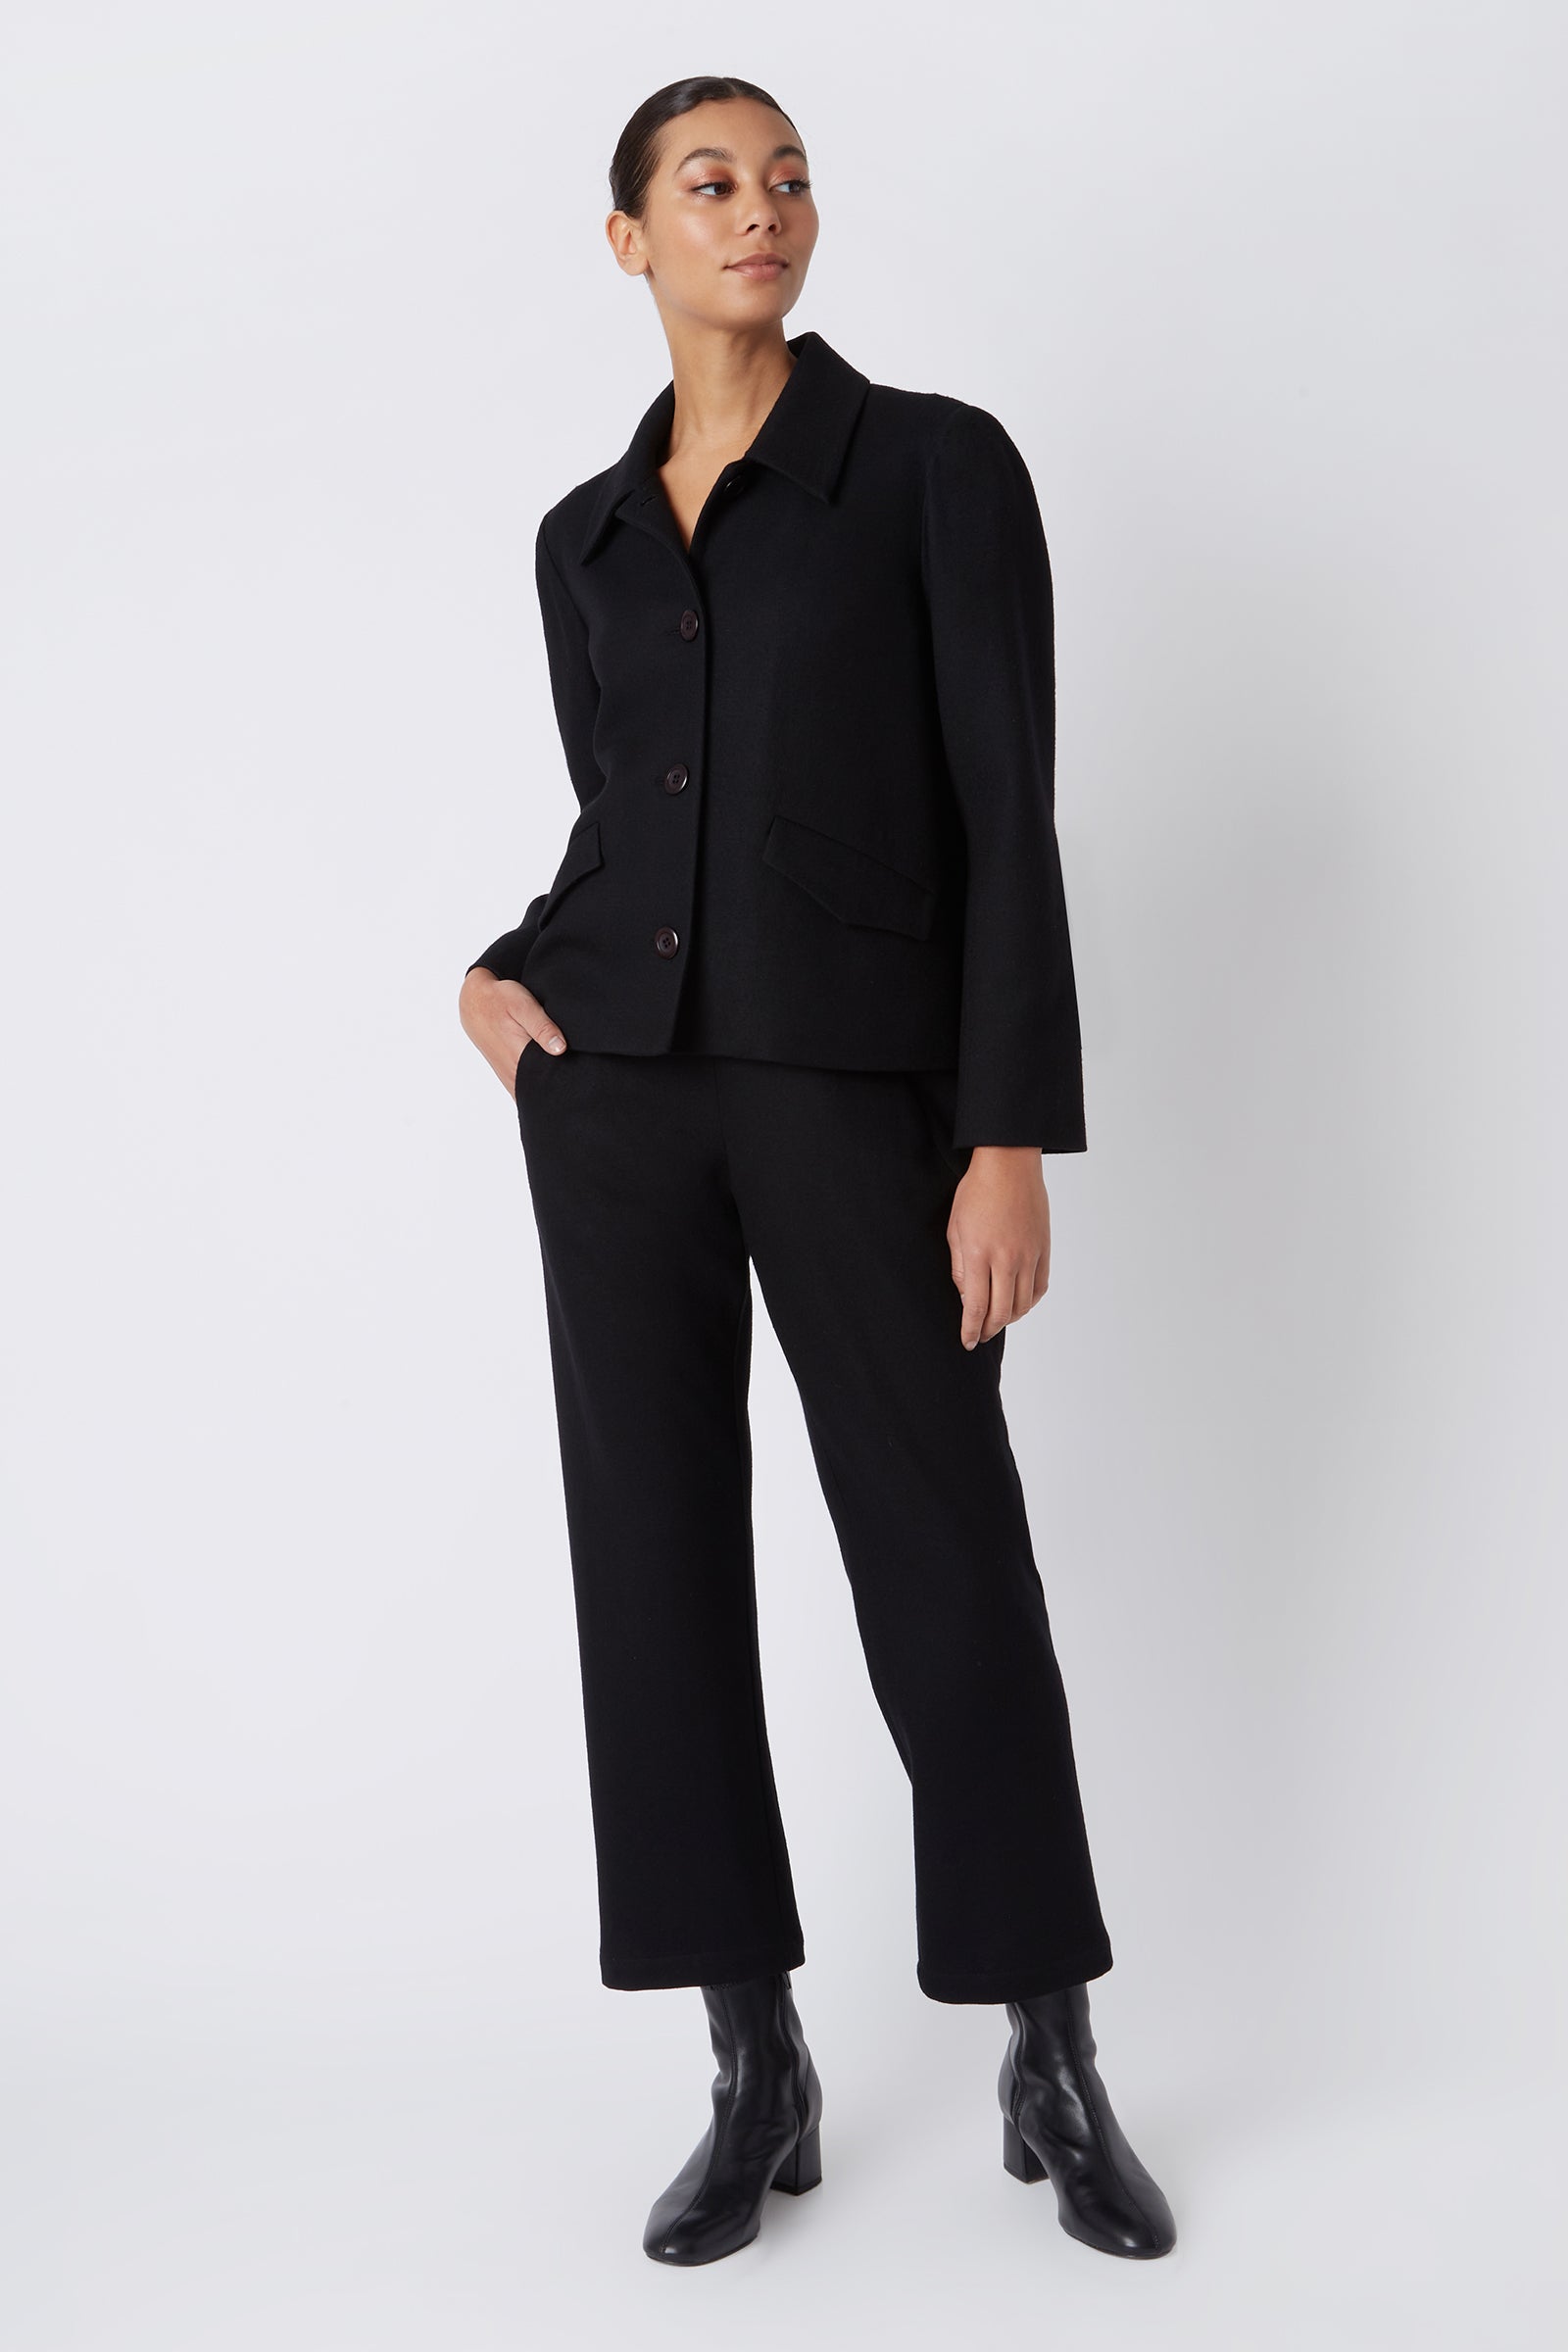 Kal Rieman Sylvie FJ Swing Jacket in Black Felted Jersey on Model Looking Left Full Front View